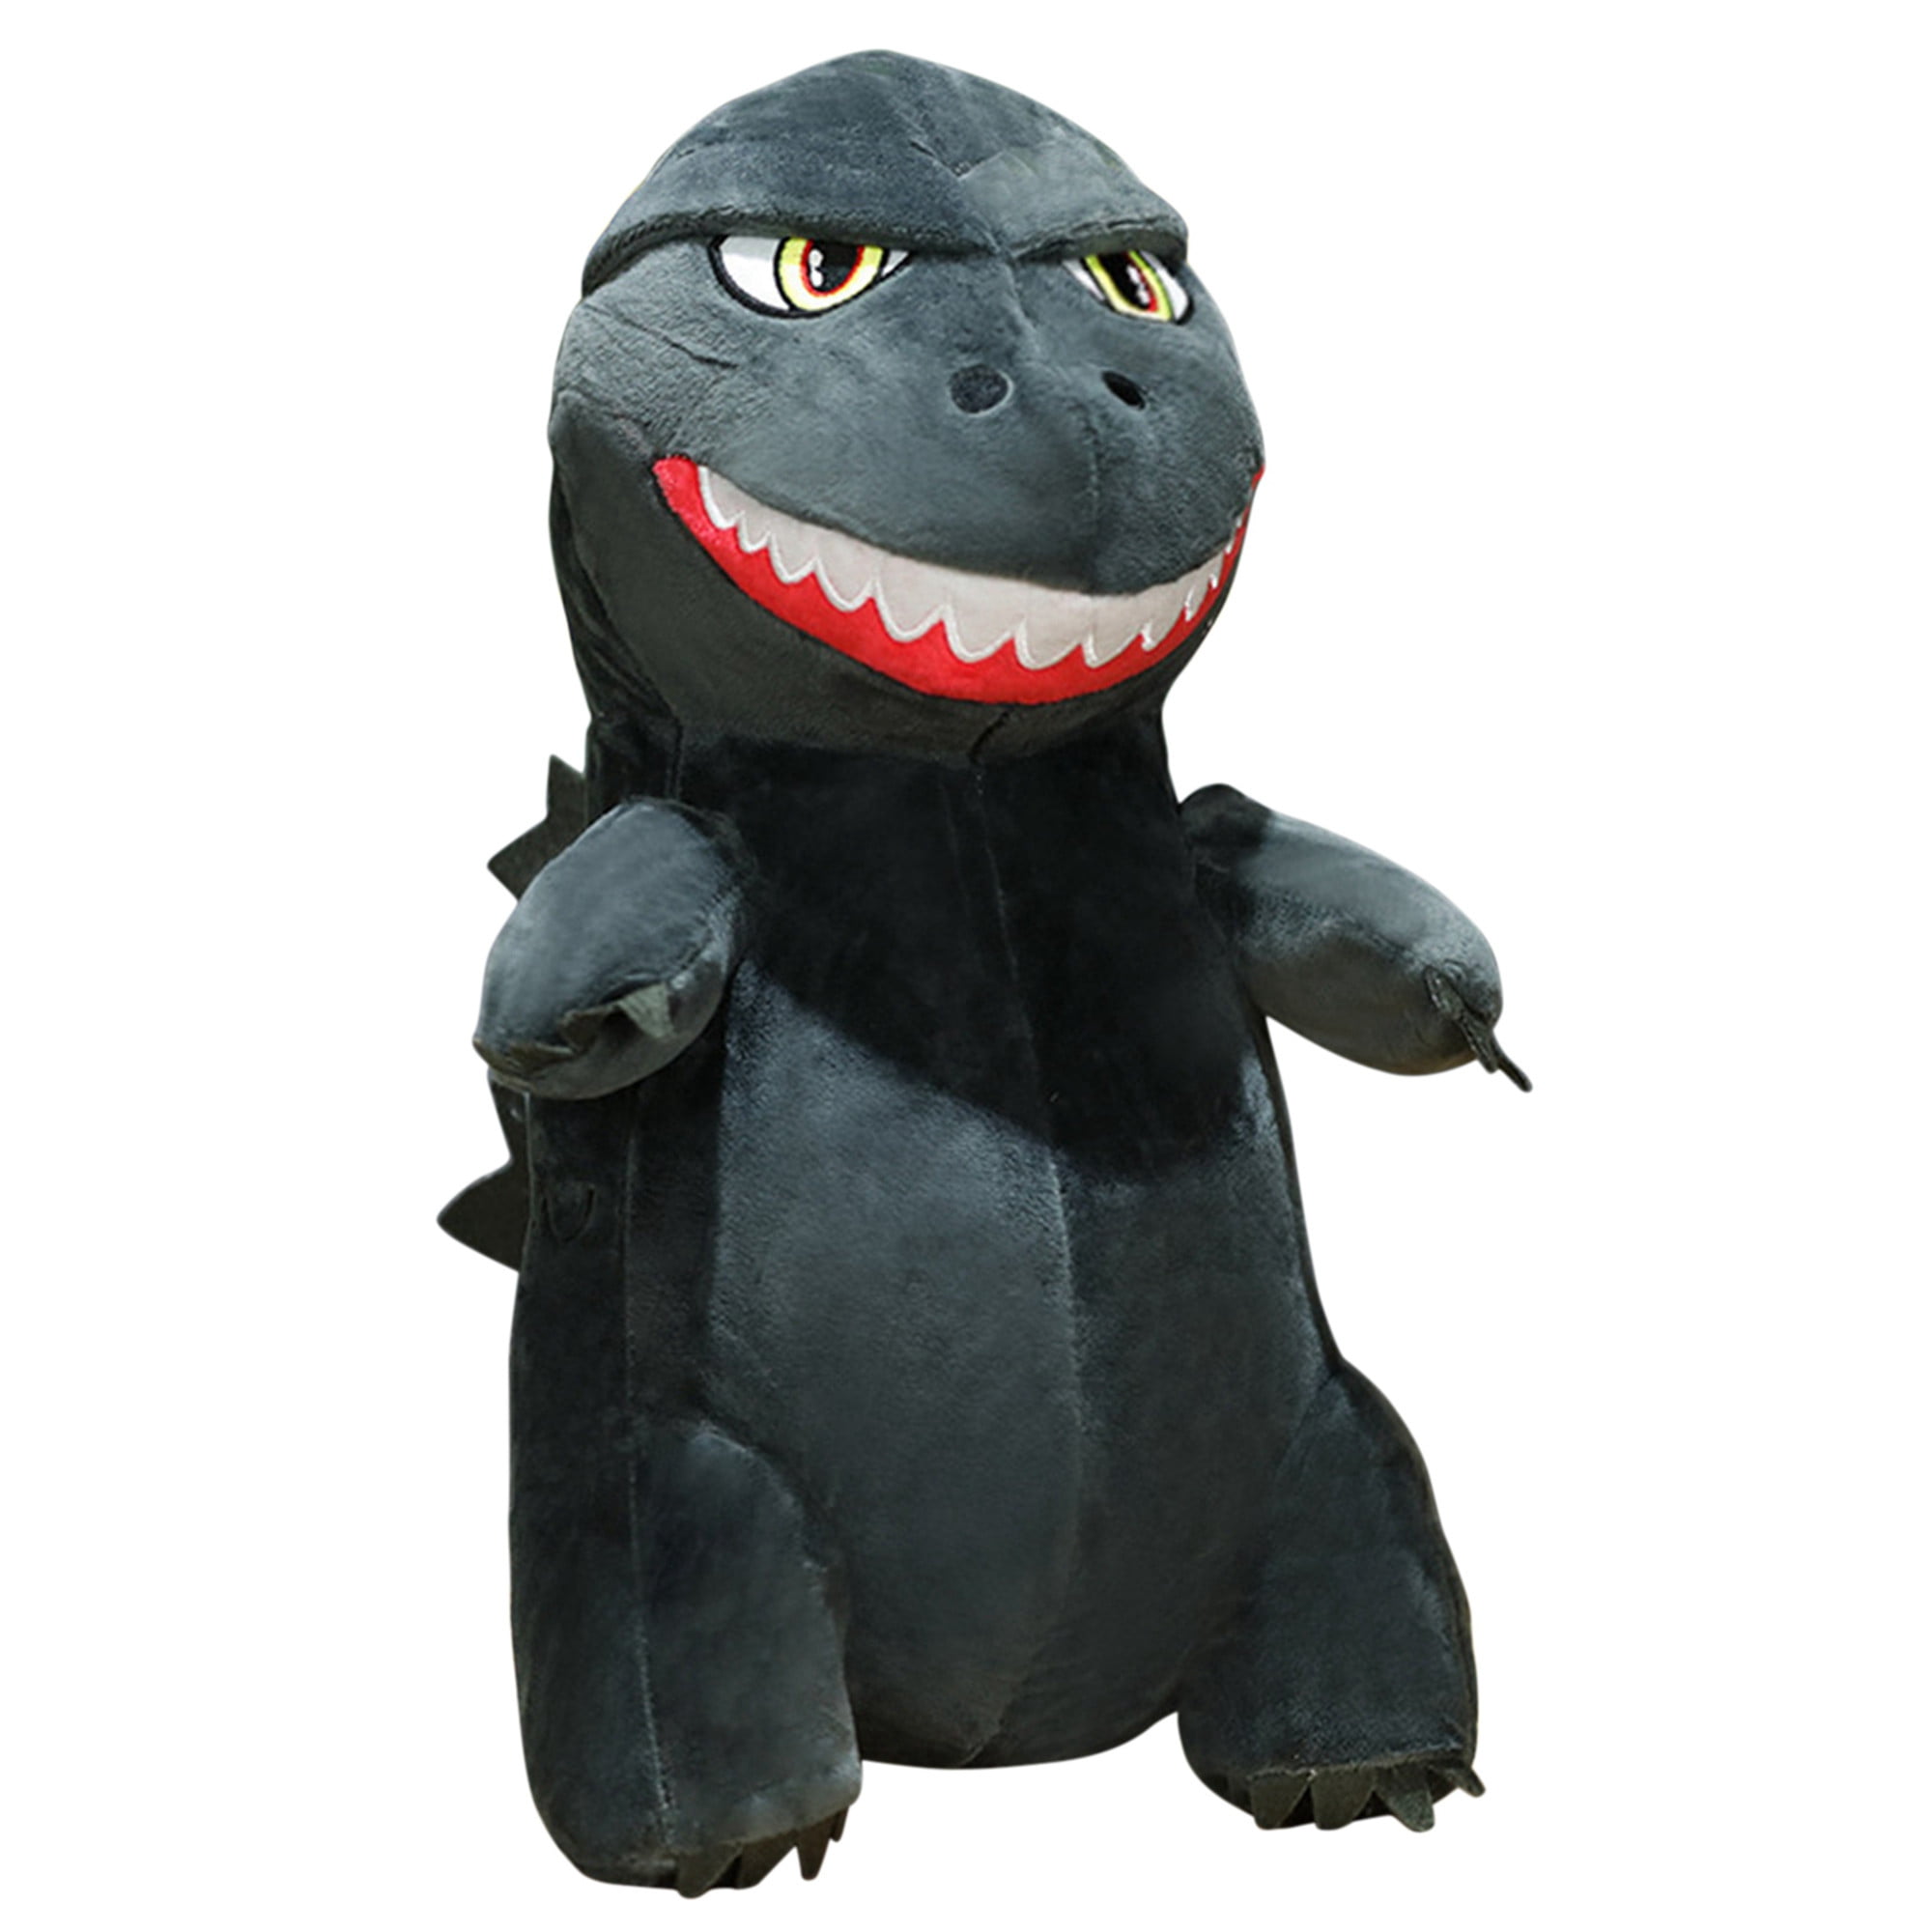 8" Godzilla Plush Toy Stuffed Animal Doll Figure Pillow Birthday Present Gift 